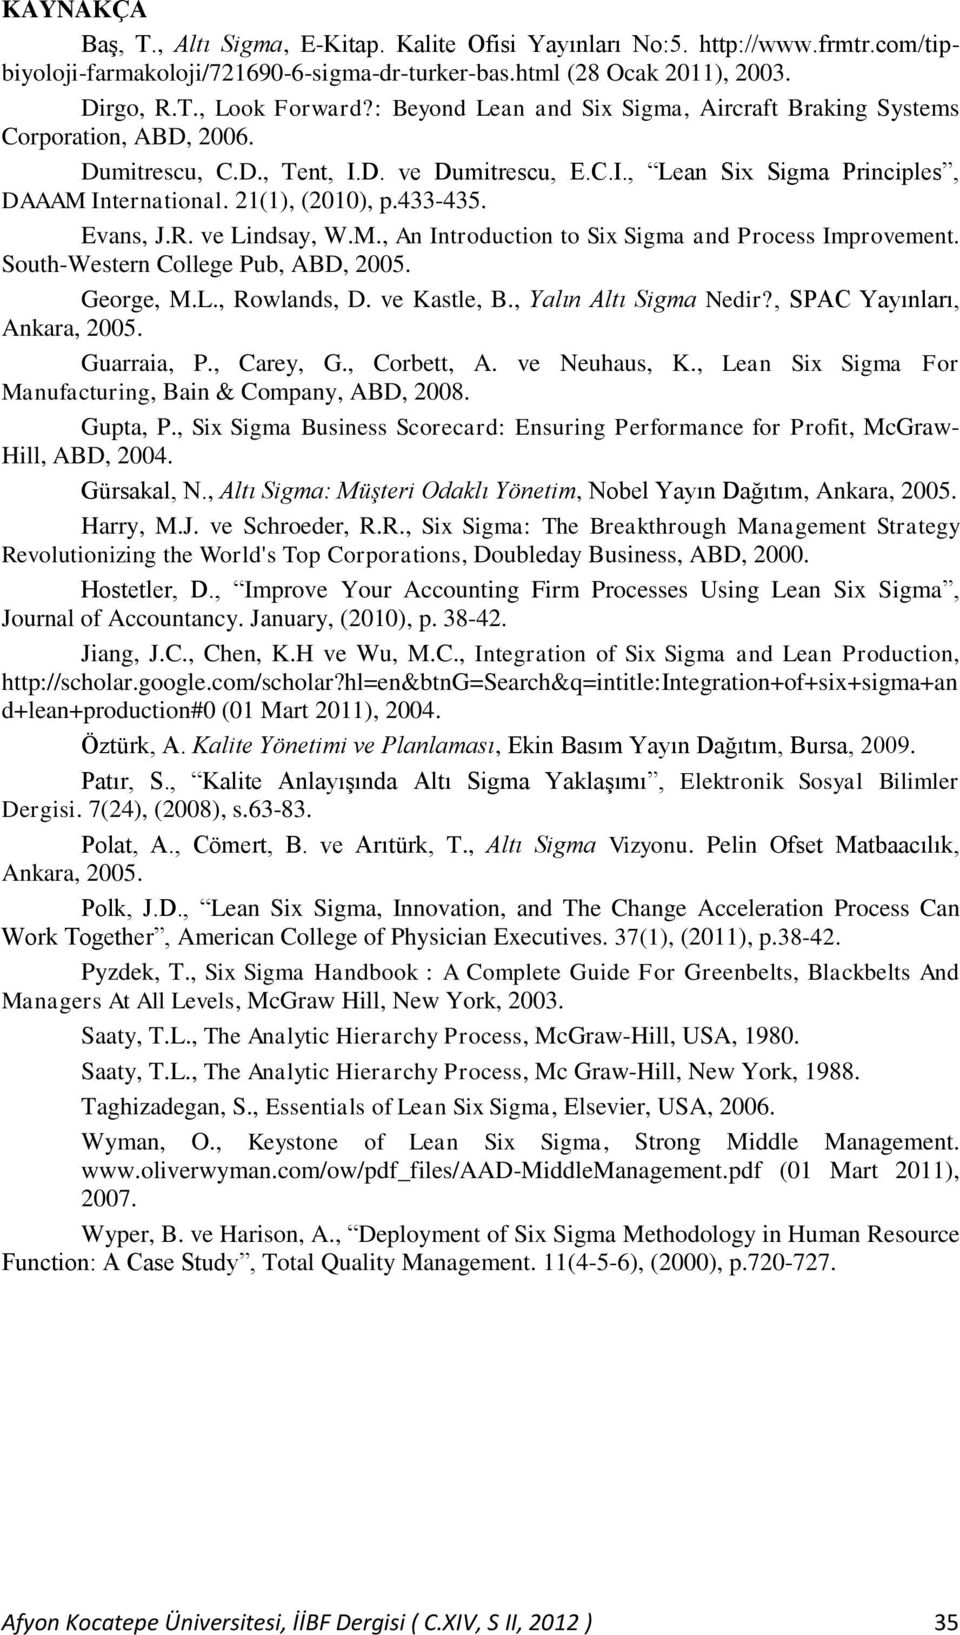 433-435. Evans, J.R. ve Lindsay, W.M., An Introduction to Six Sigma and Process Improvement. South-Western College Pub, ABD, 2005. George, M.L., Rowlands, D. ve Kastle, B., Yalın Altı Sigma Nedir?